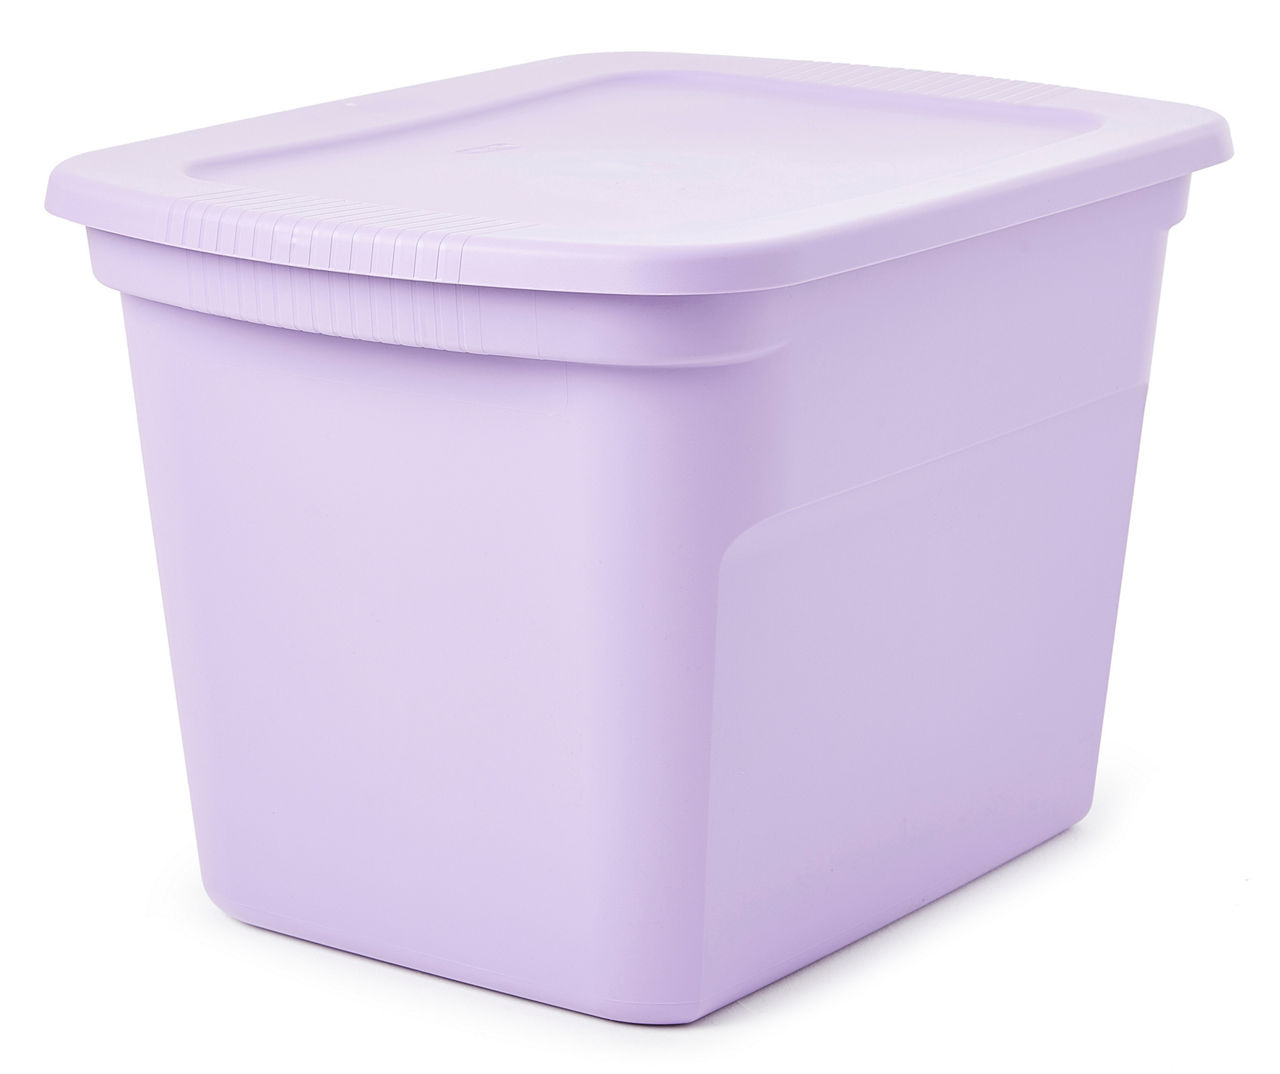 Sterilite 18 Gallon Tote Lilac Pixie, Plastic Bins & Drawers, Household